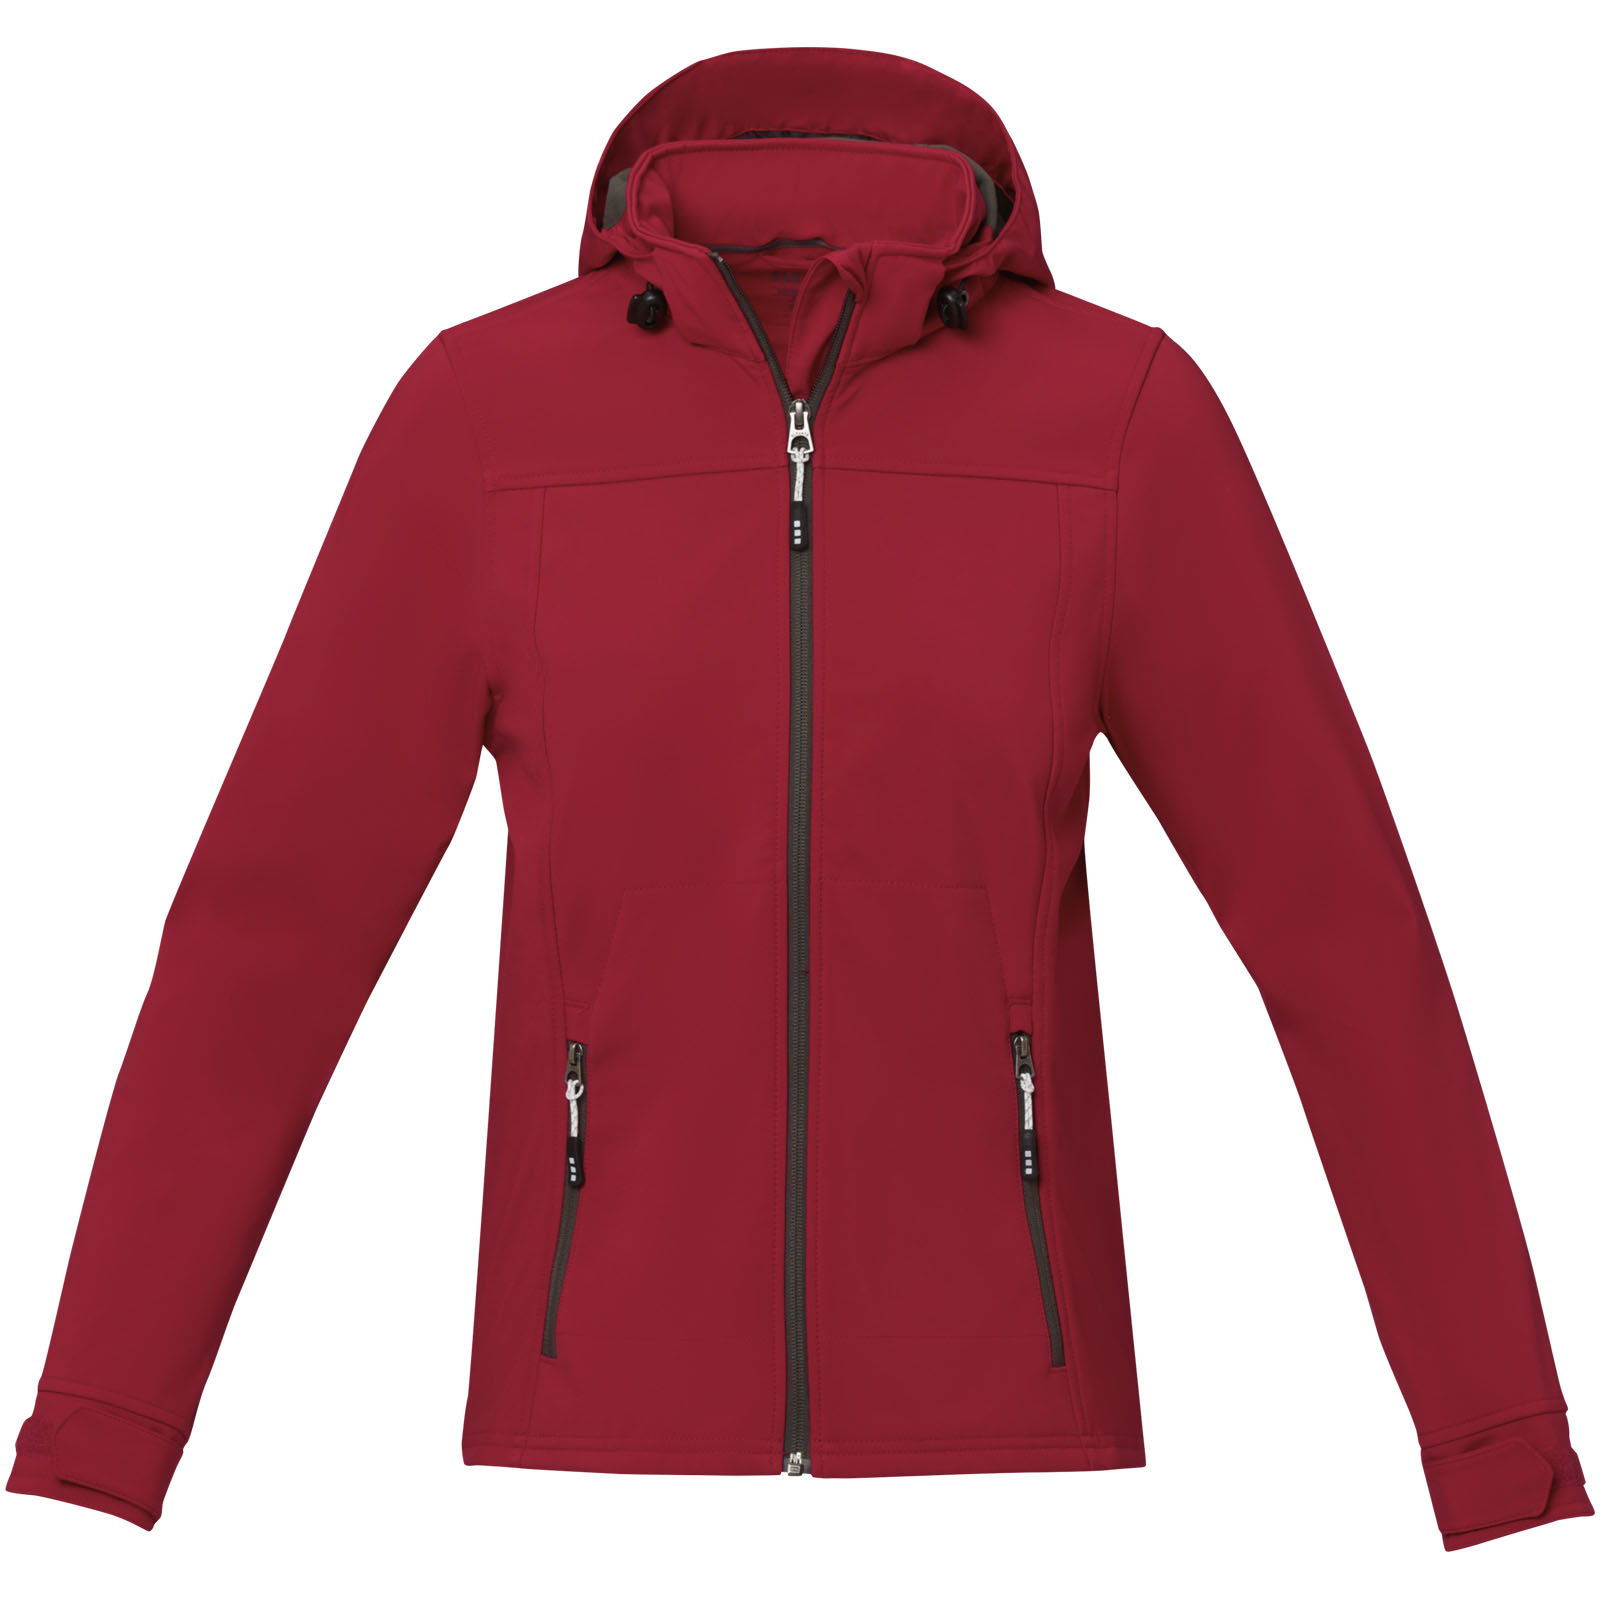 Advertising Jackets - Langley women's softshell jacket - 1